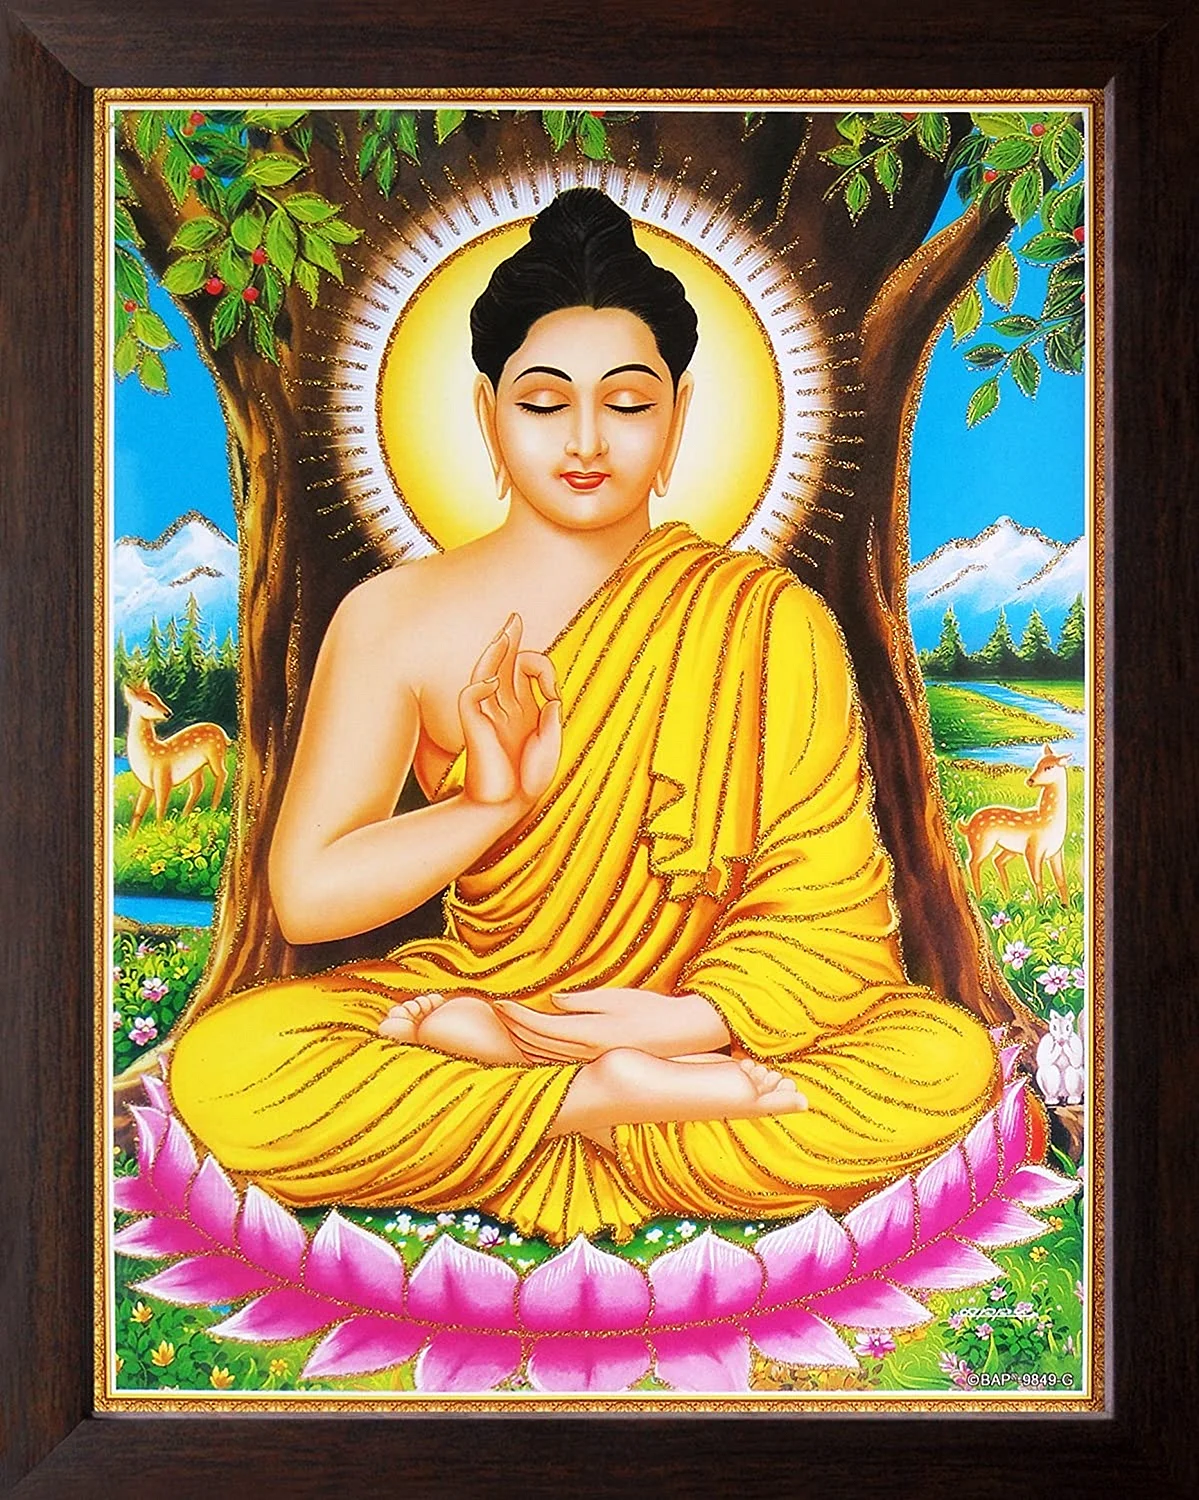 Bhagwan Buddha Wallpaper